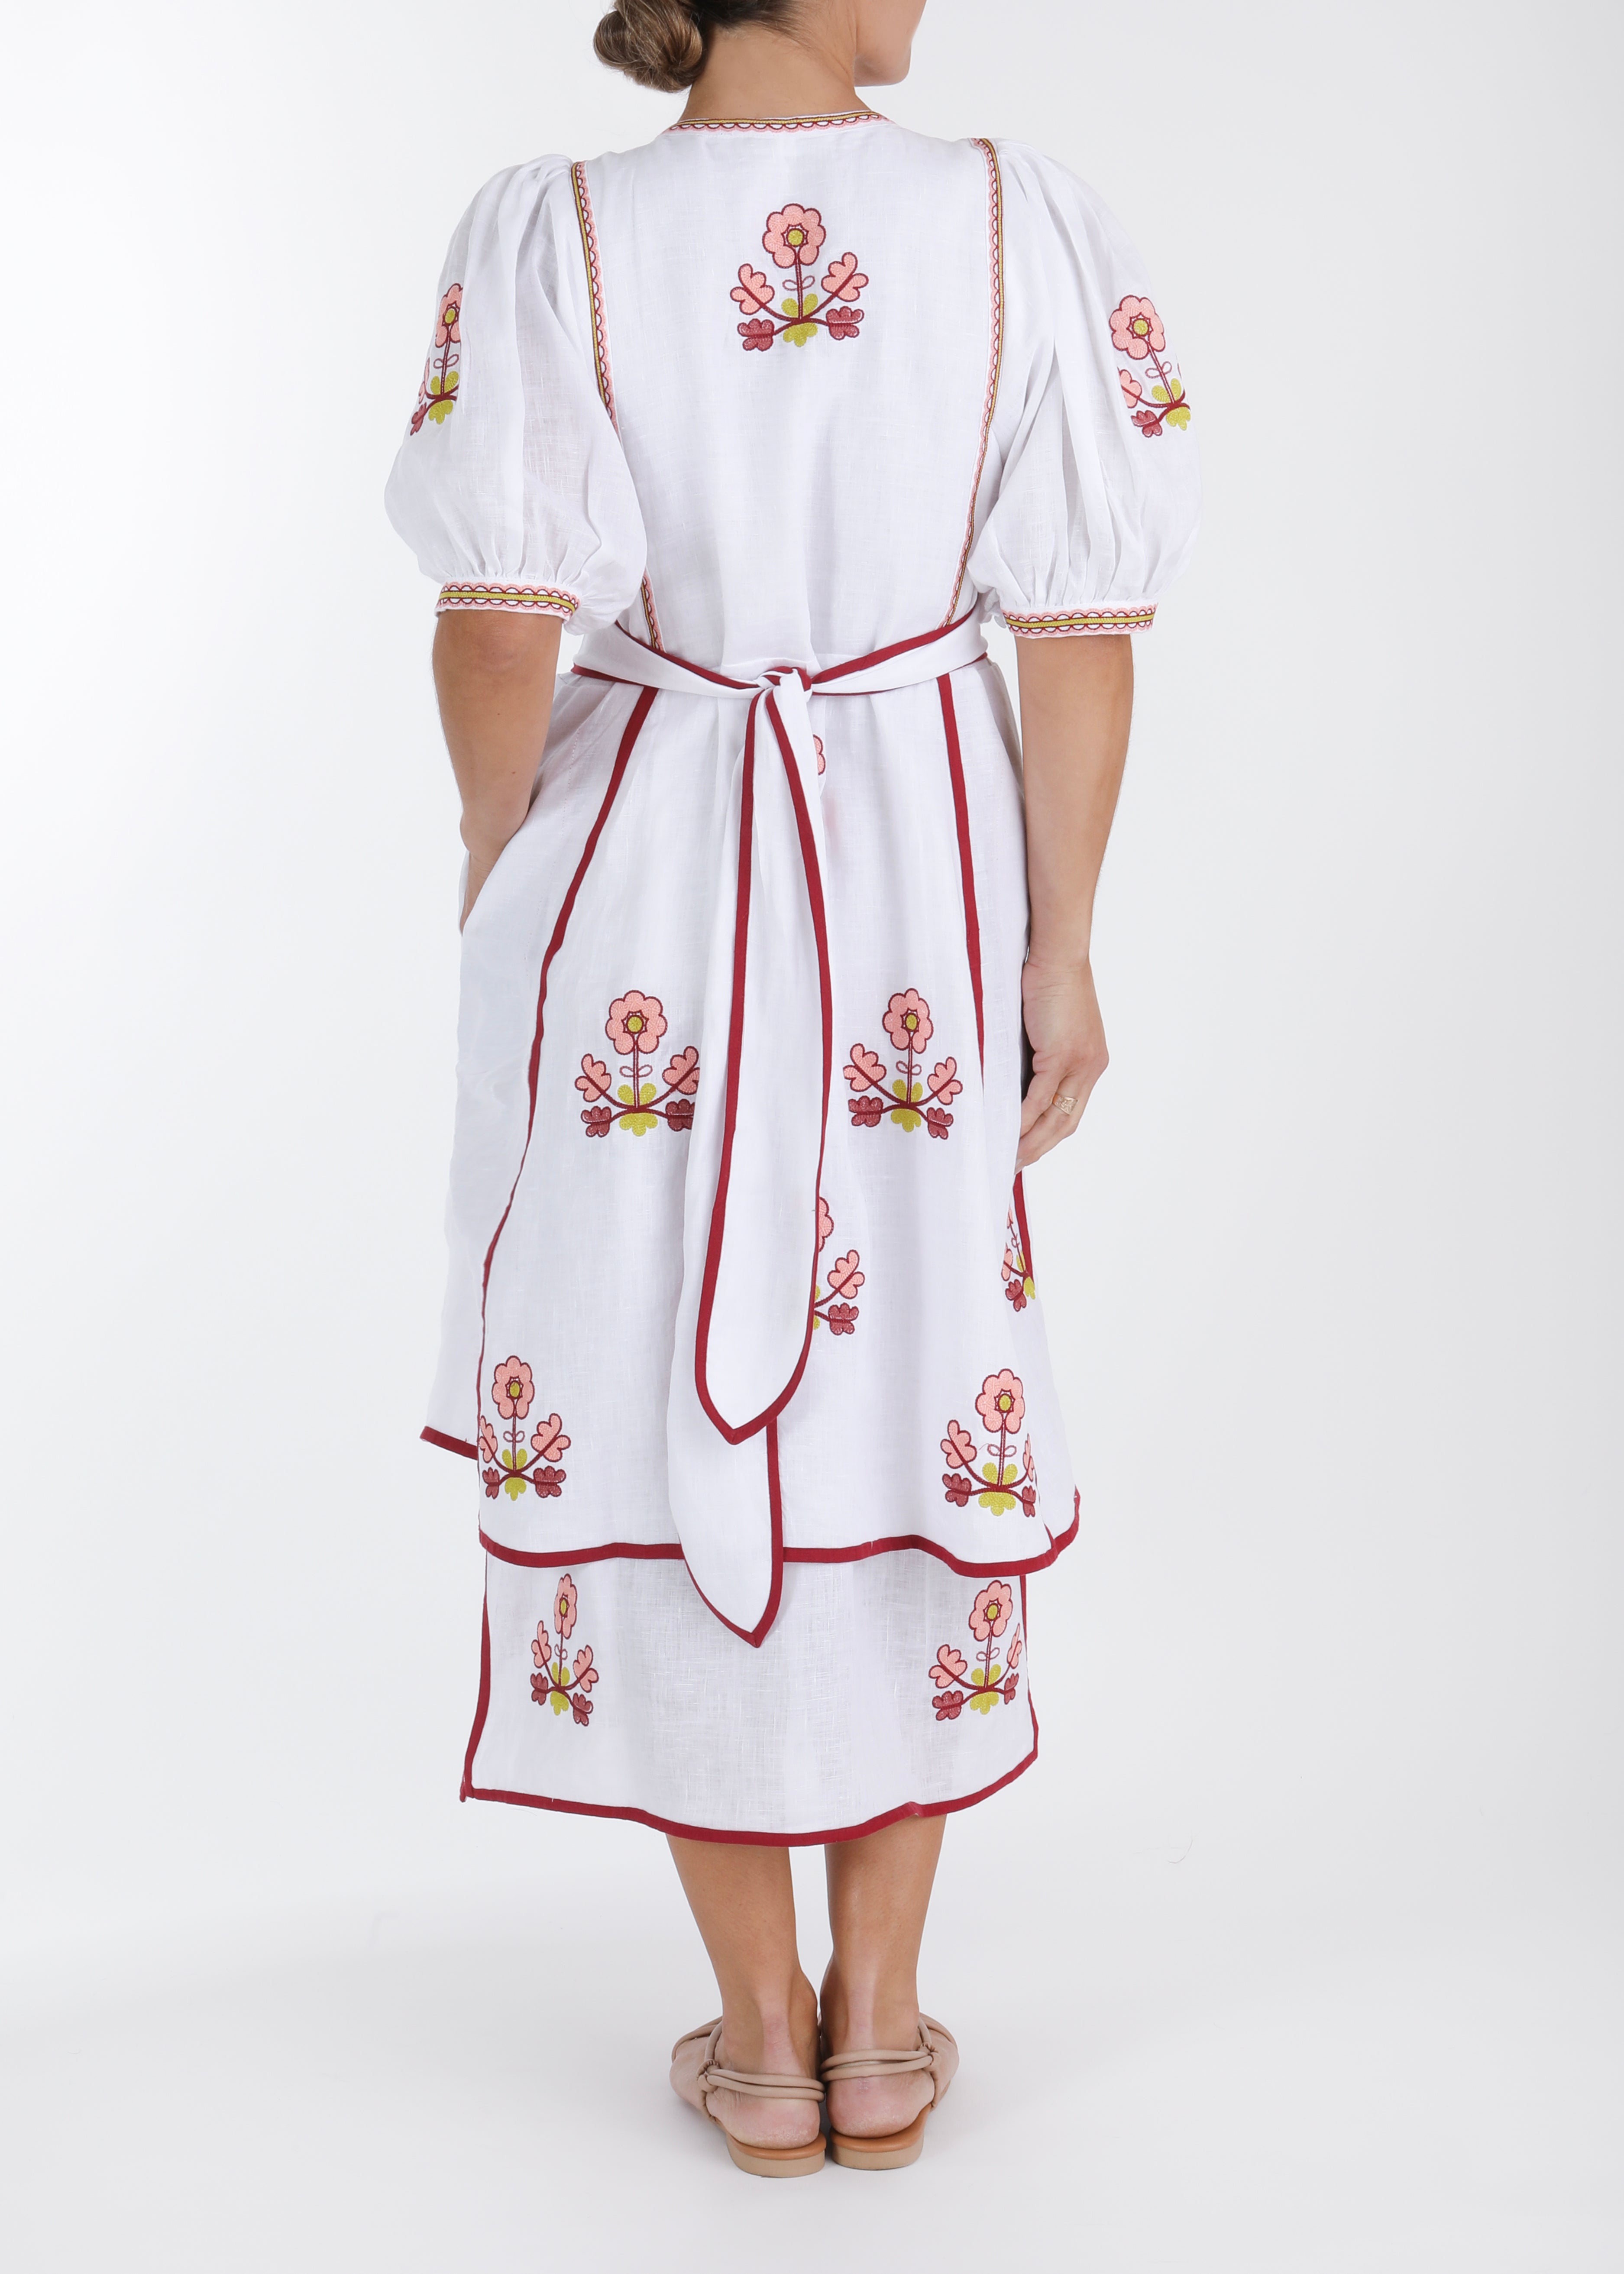 Lillie Ukrainian Embroidered Dress - White, Blush Pink, Wine by Larkin Lane